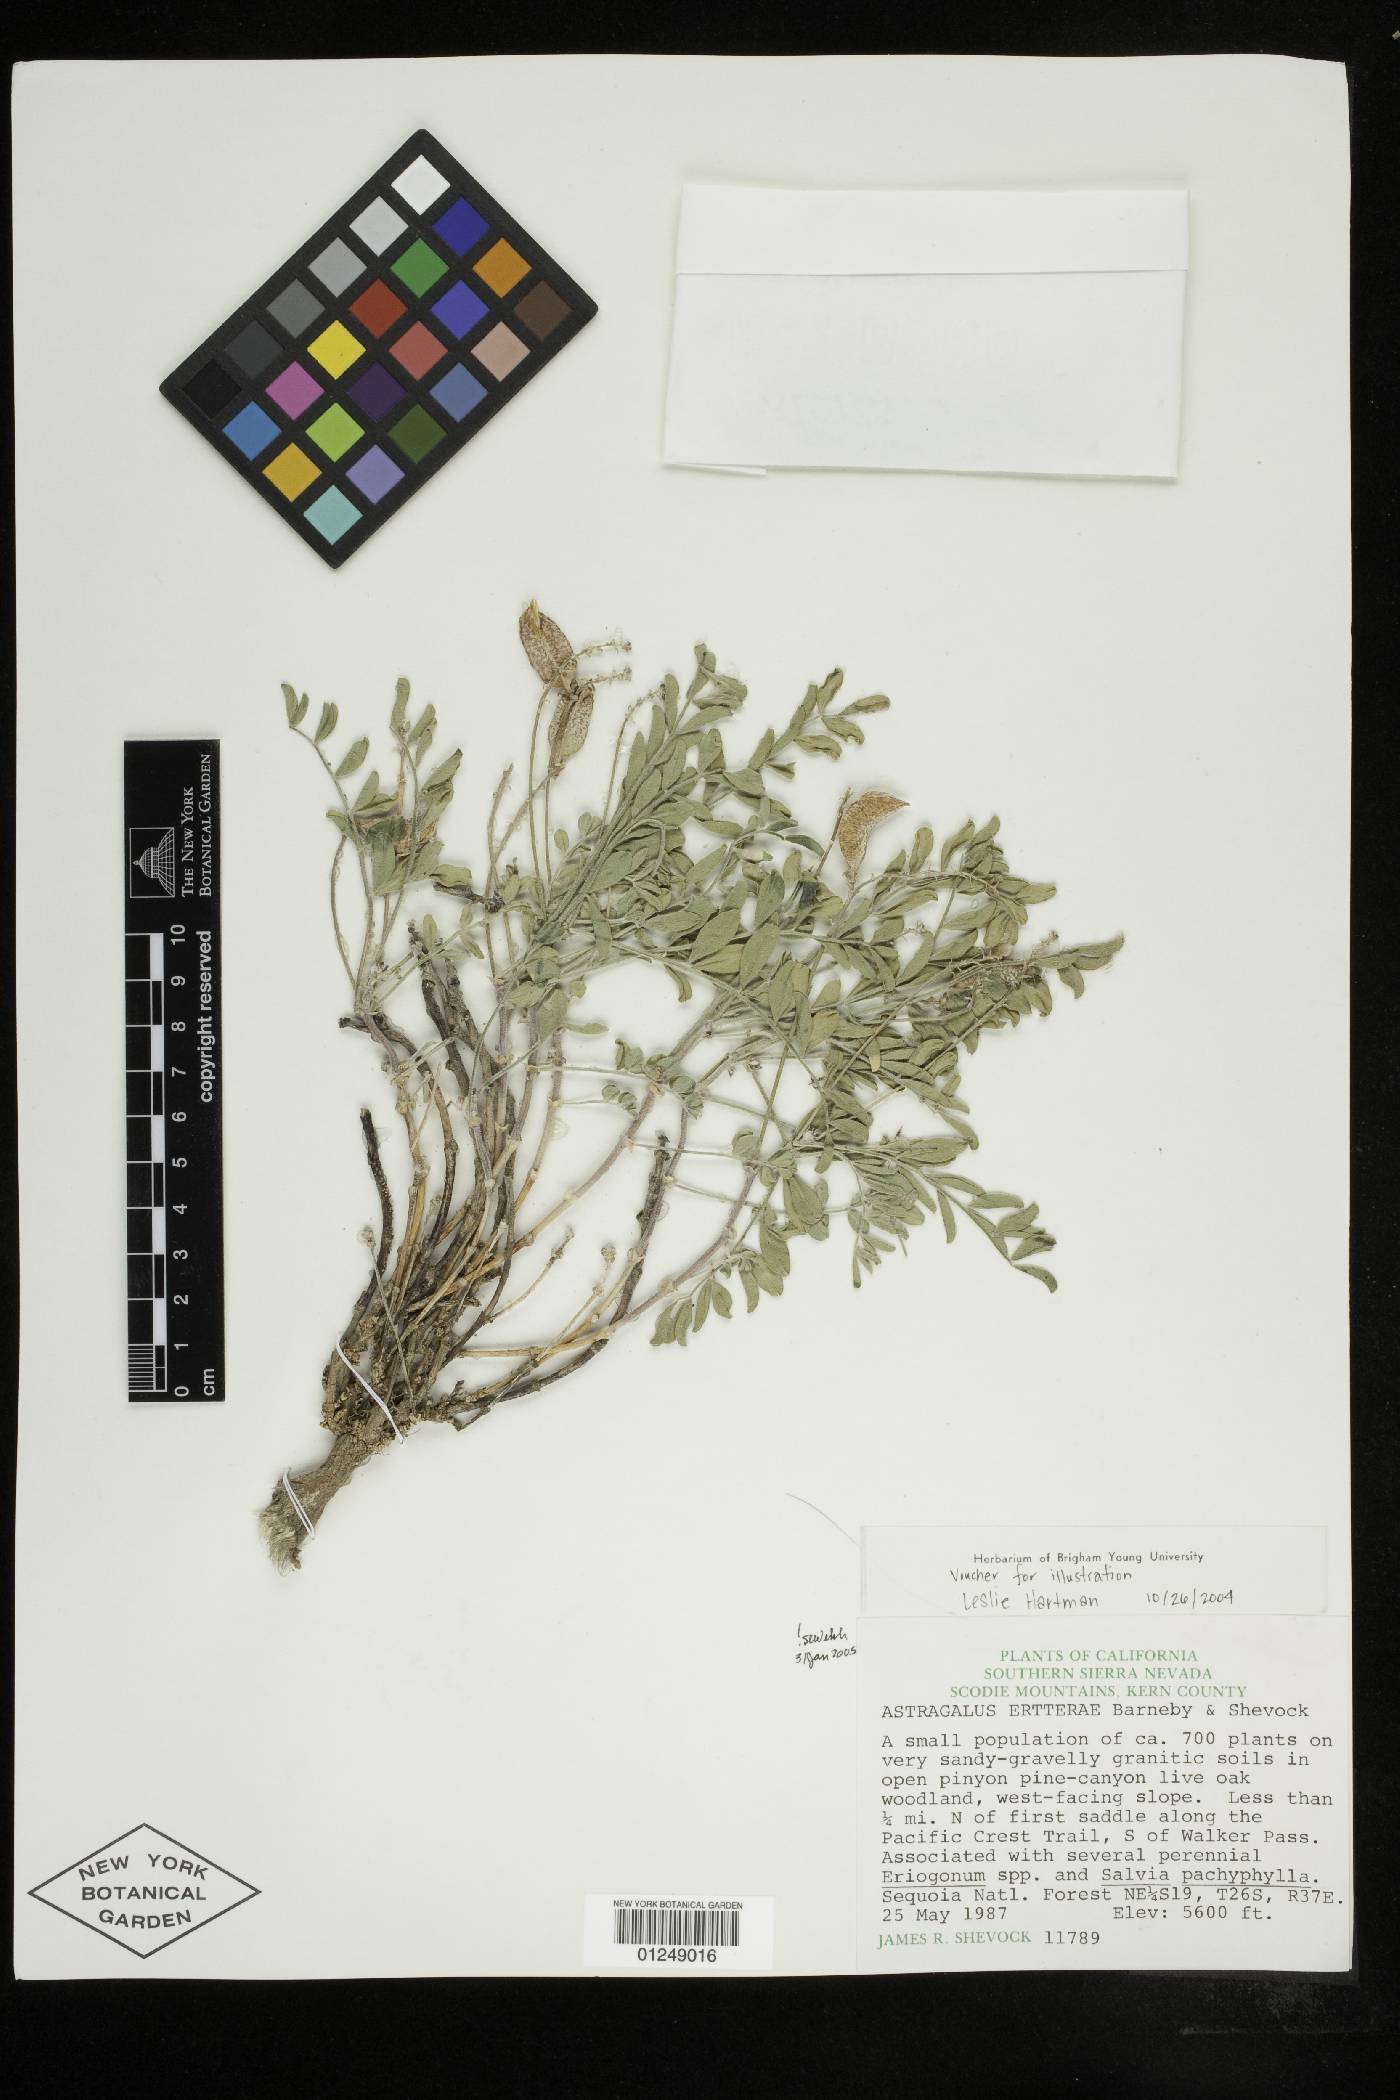 Astragalus ertterae image